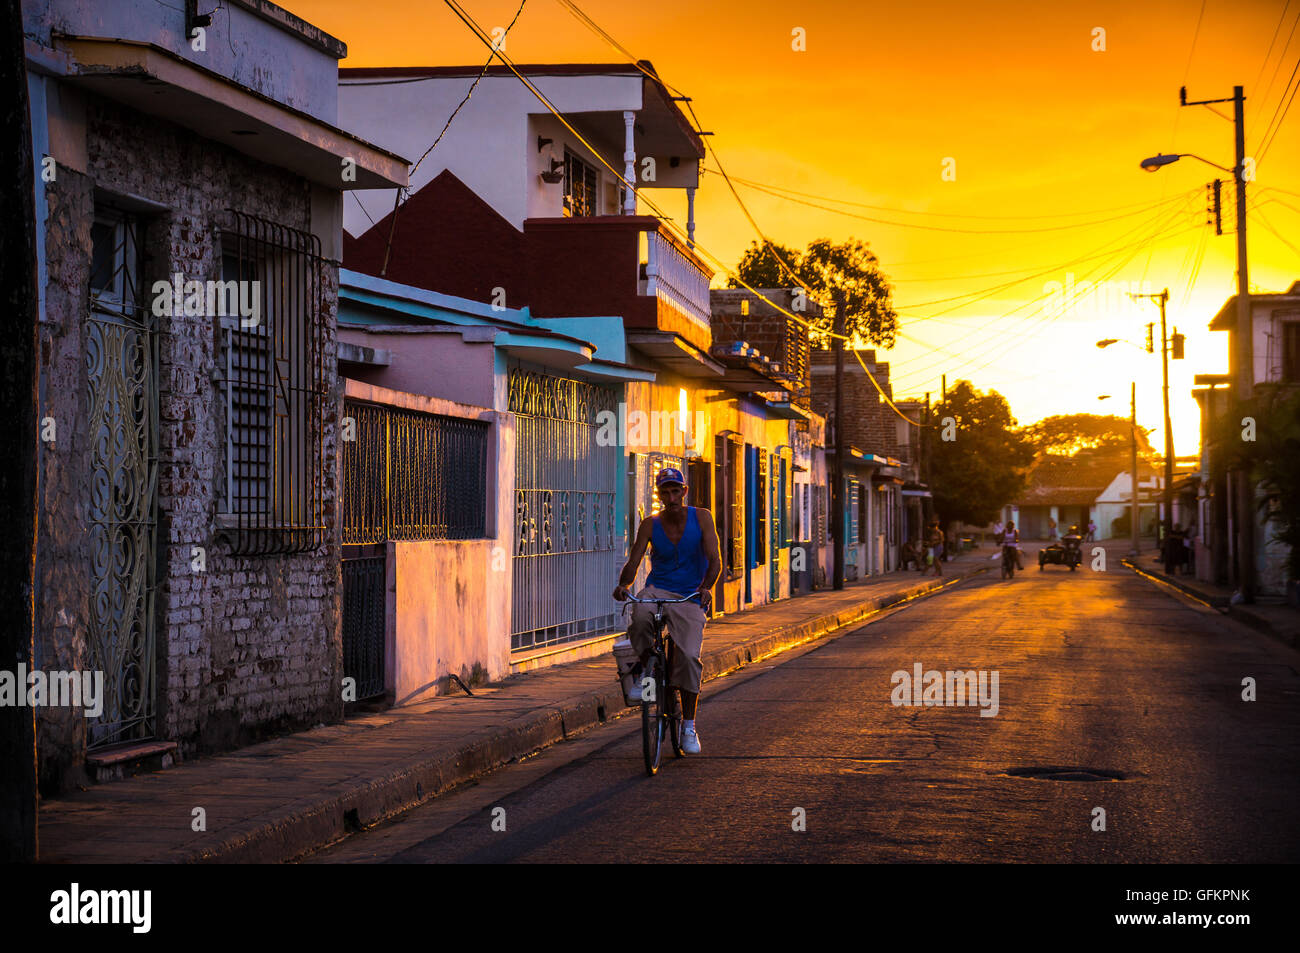 Camaguey, Cuba on January 2, 2016: Cuban man riding his bicycle through a street in the historic Caribbean city center of Camagu Stock Photo